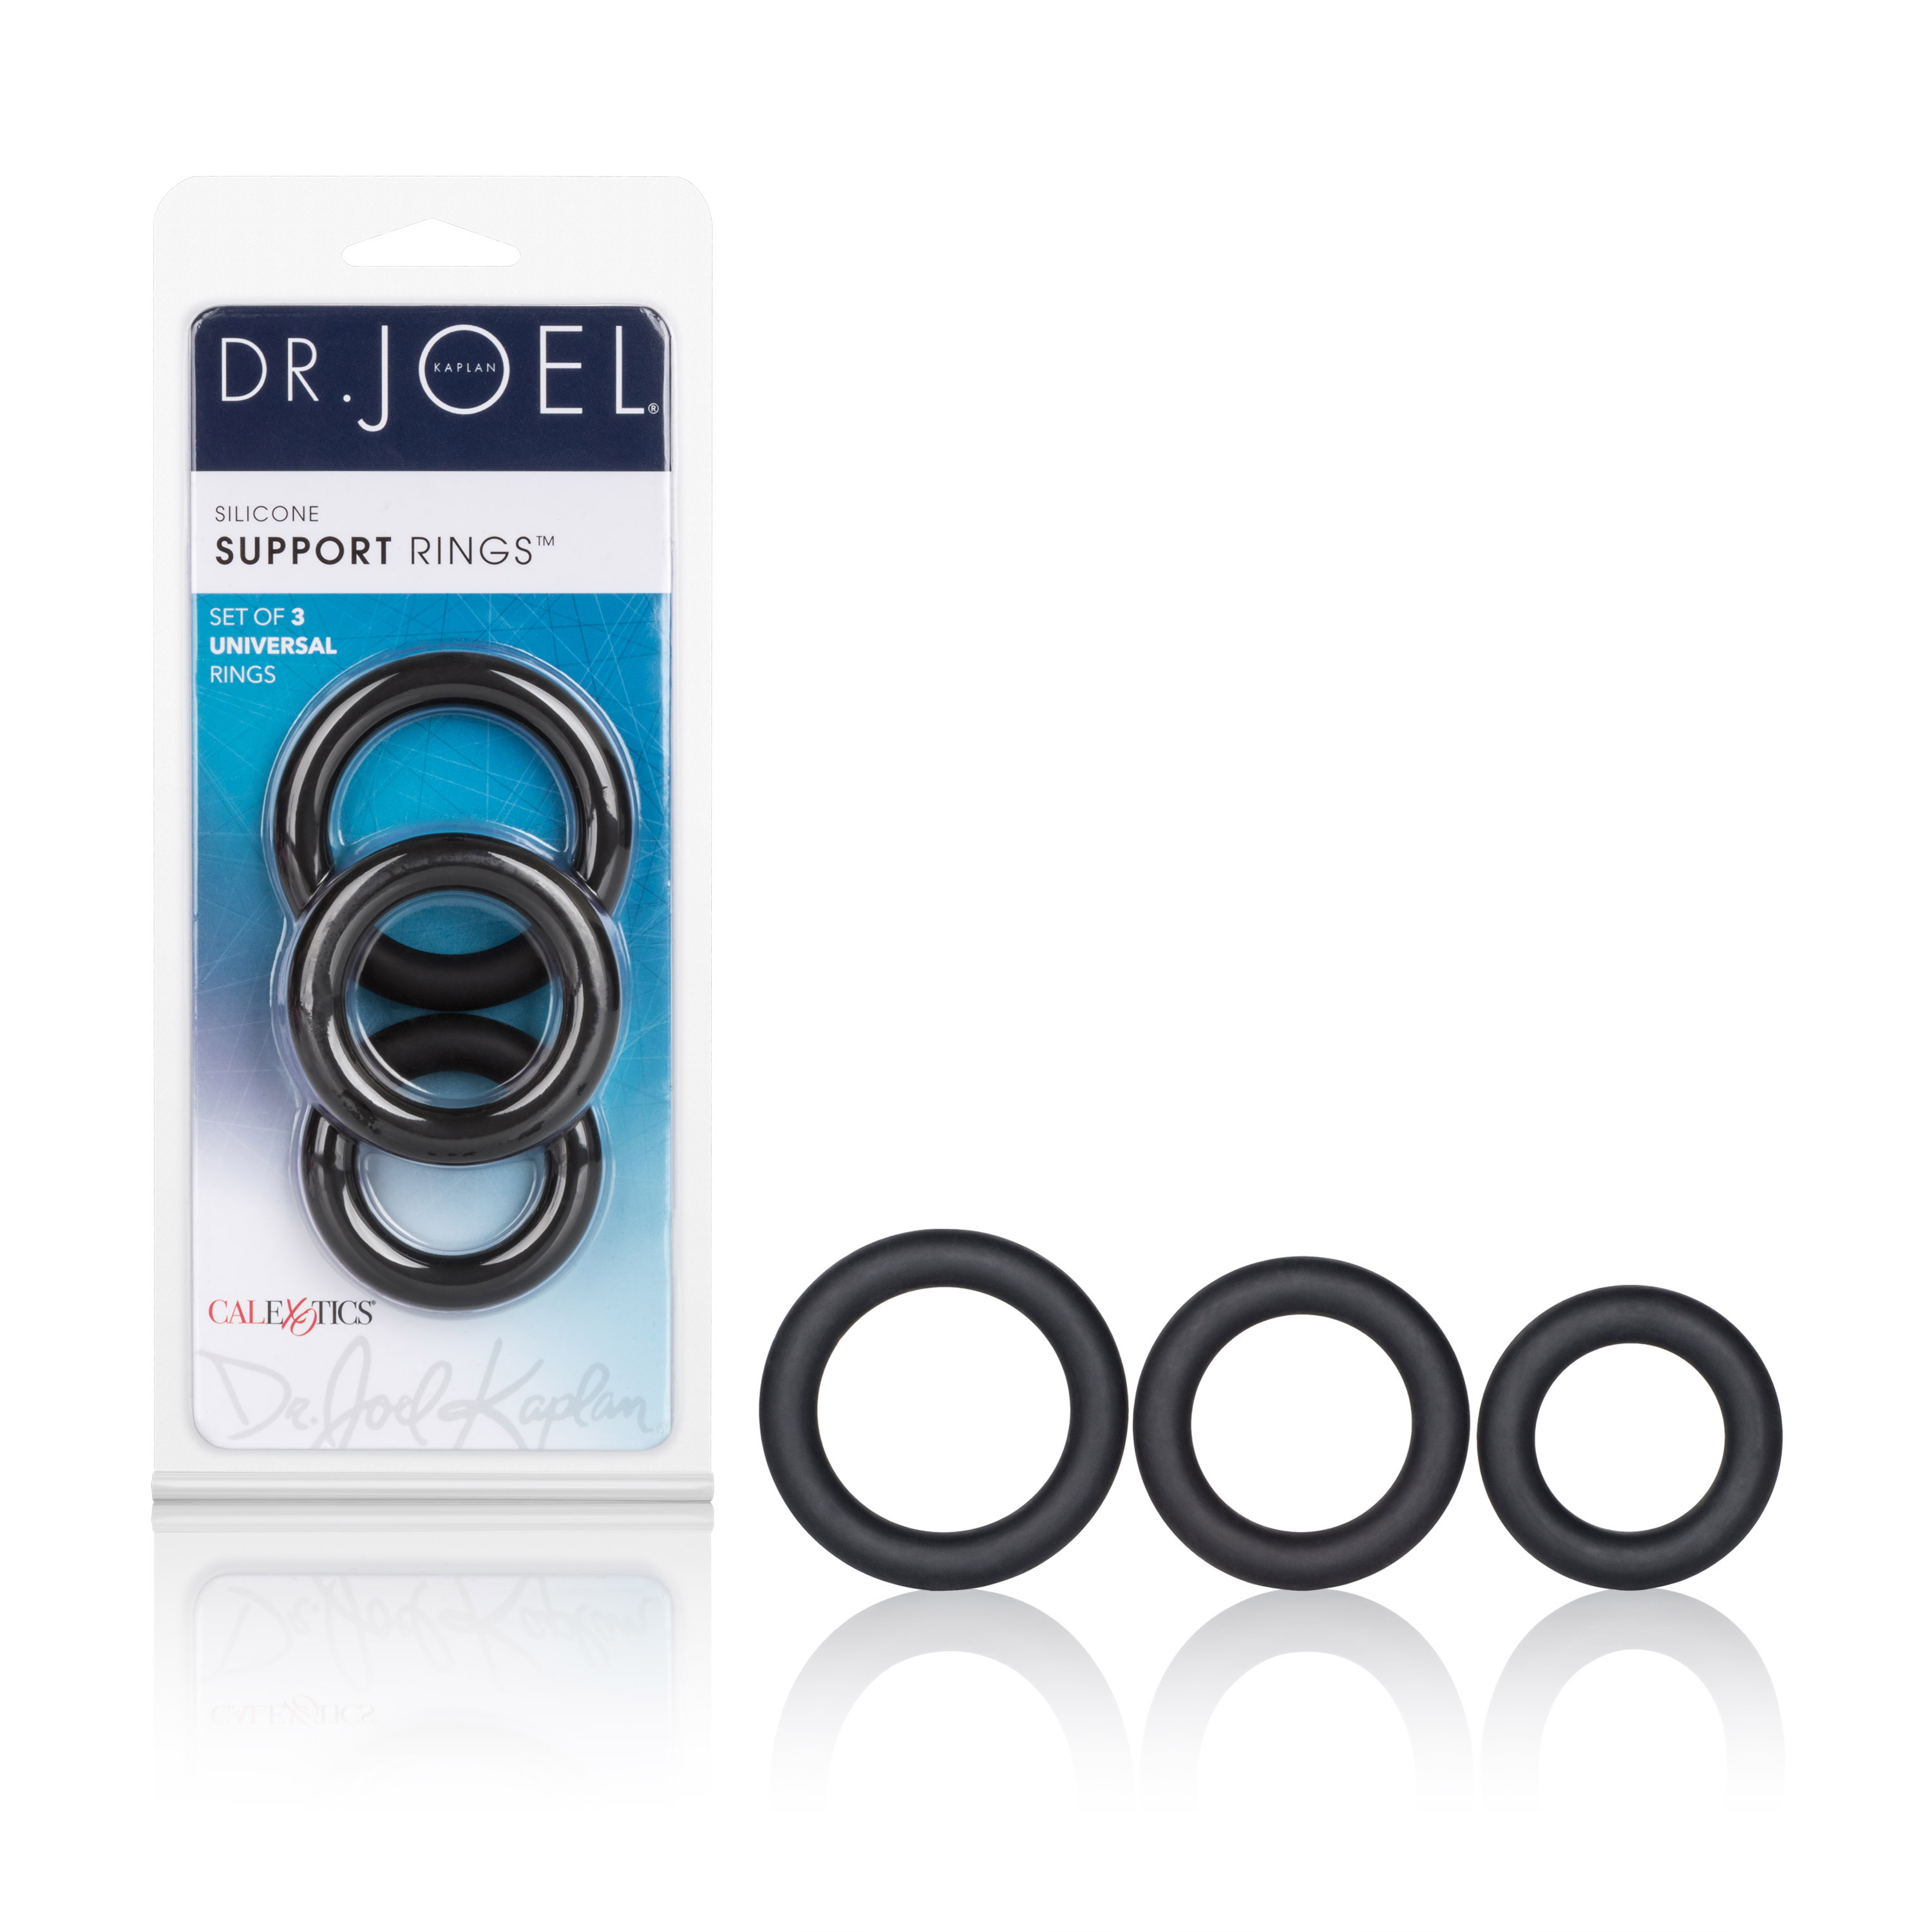 dr joel kaplan silicone support rings black 